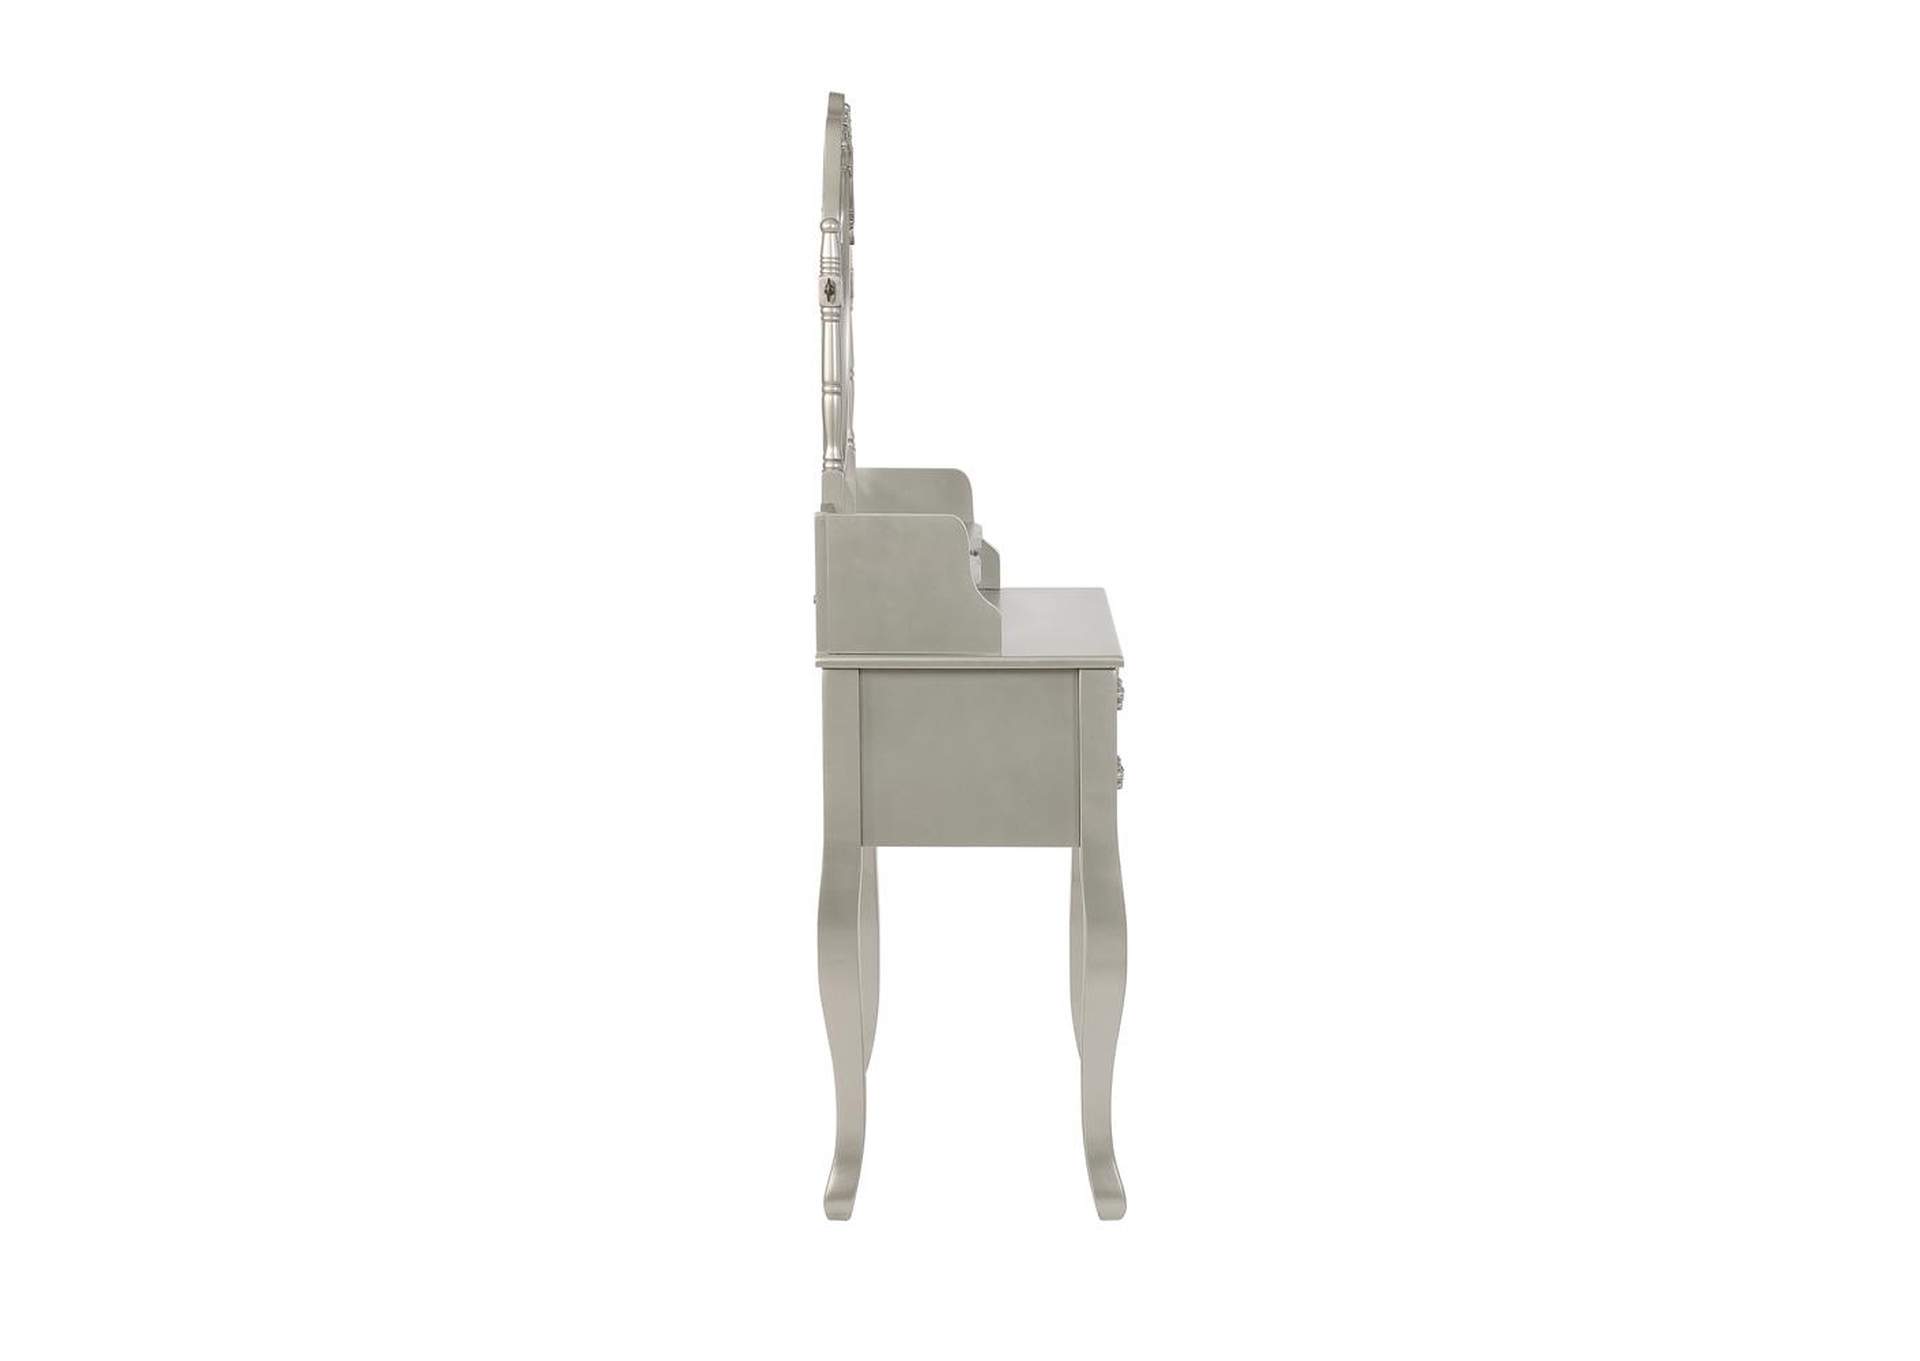 2-piece Vanity Set Metallic Silver and White,Coaster Furniture